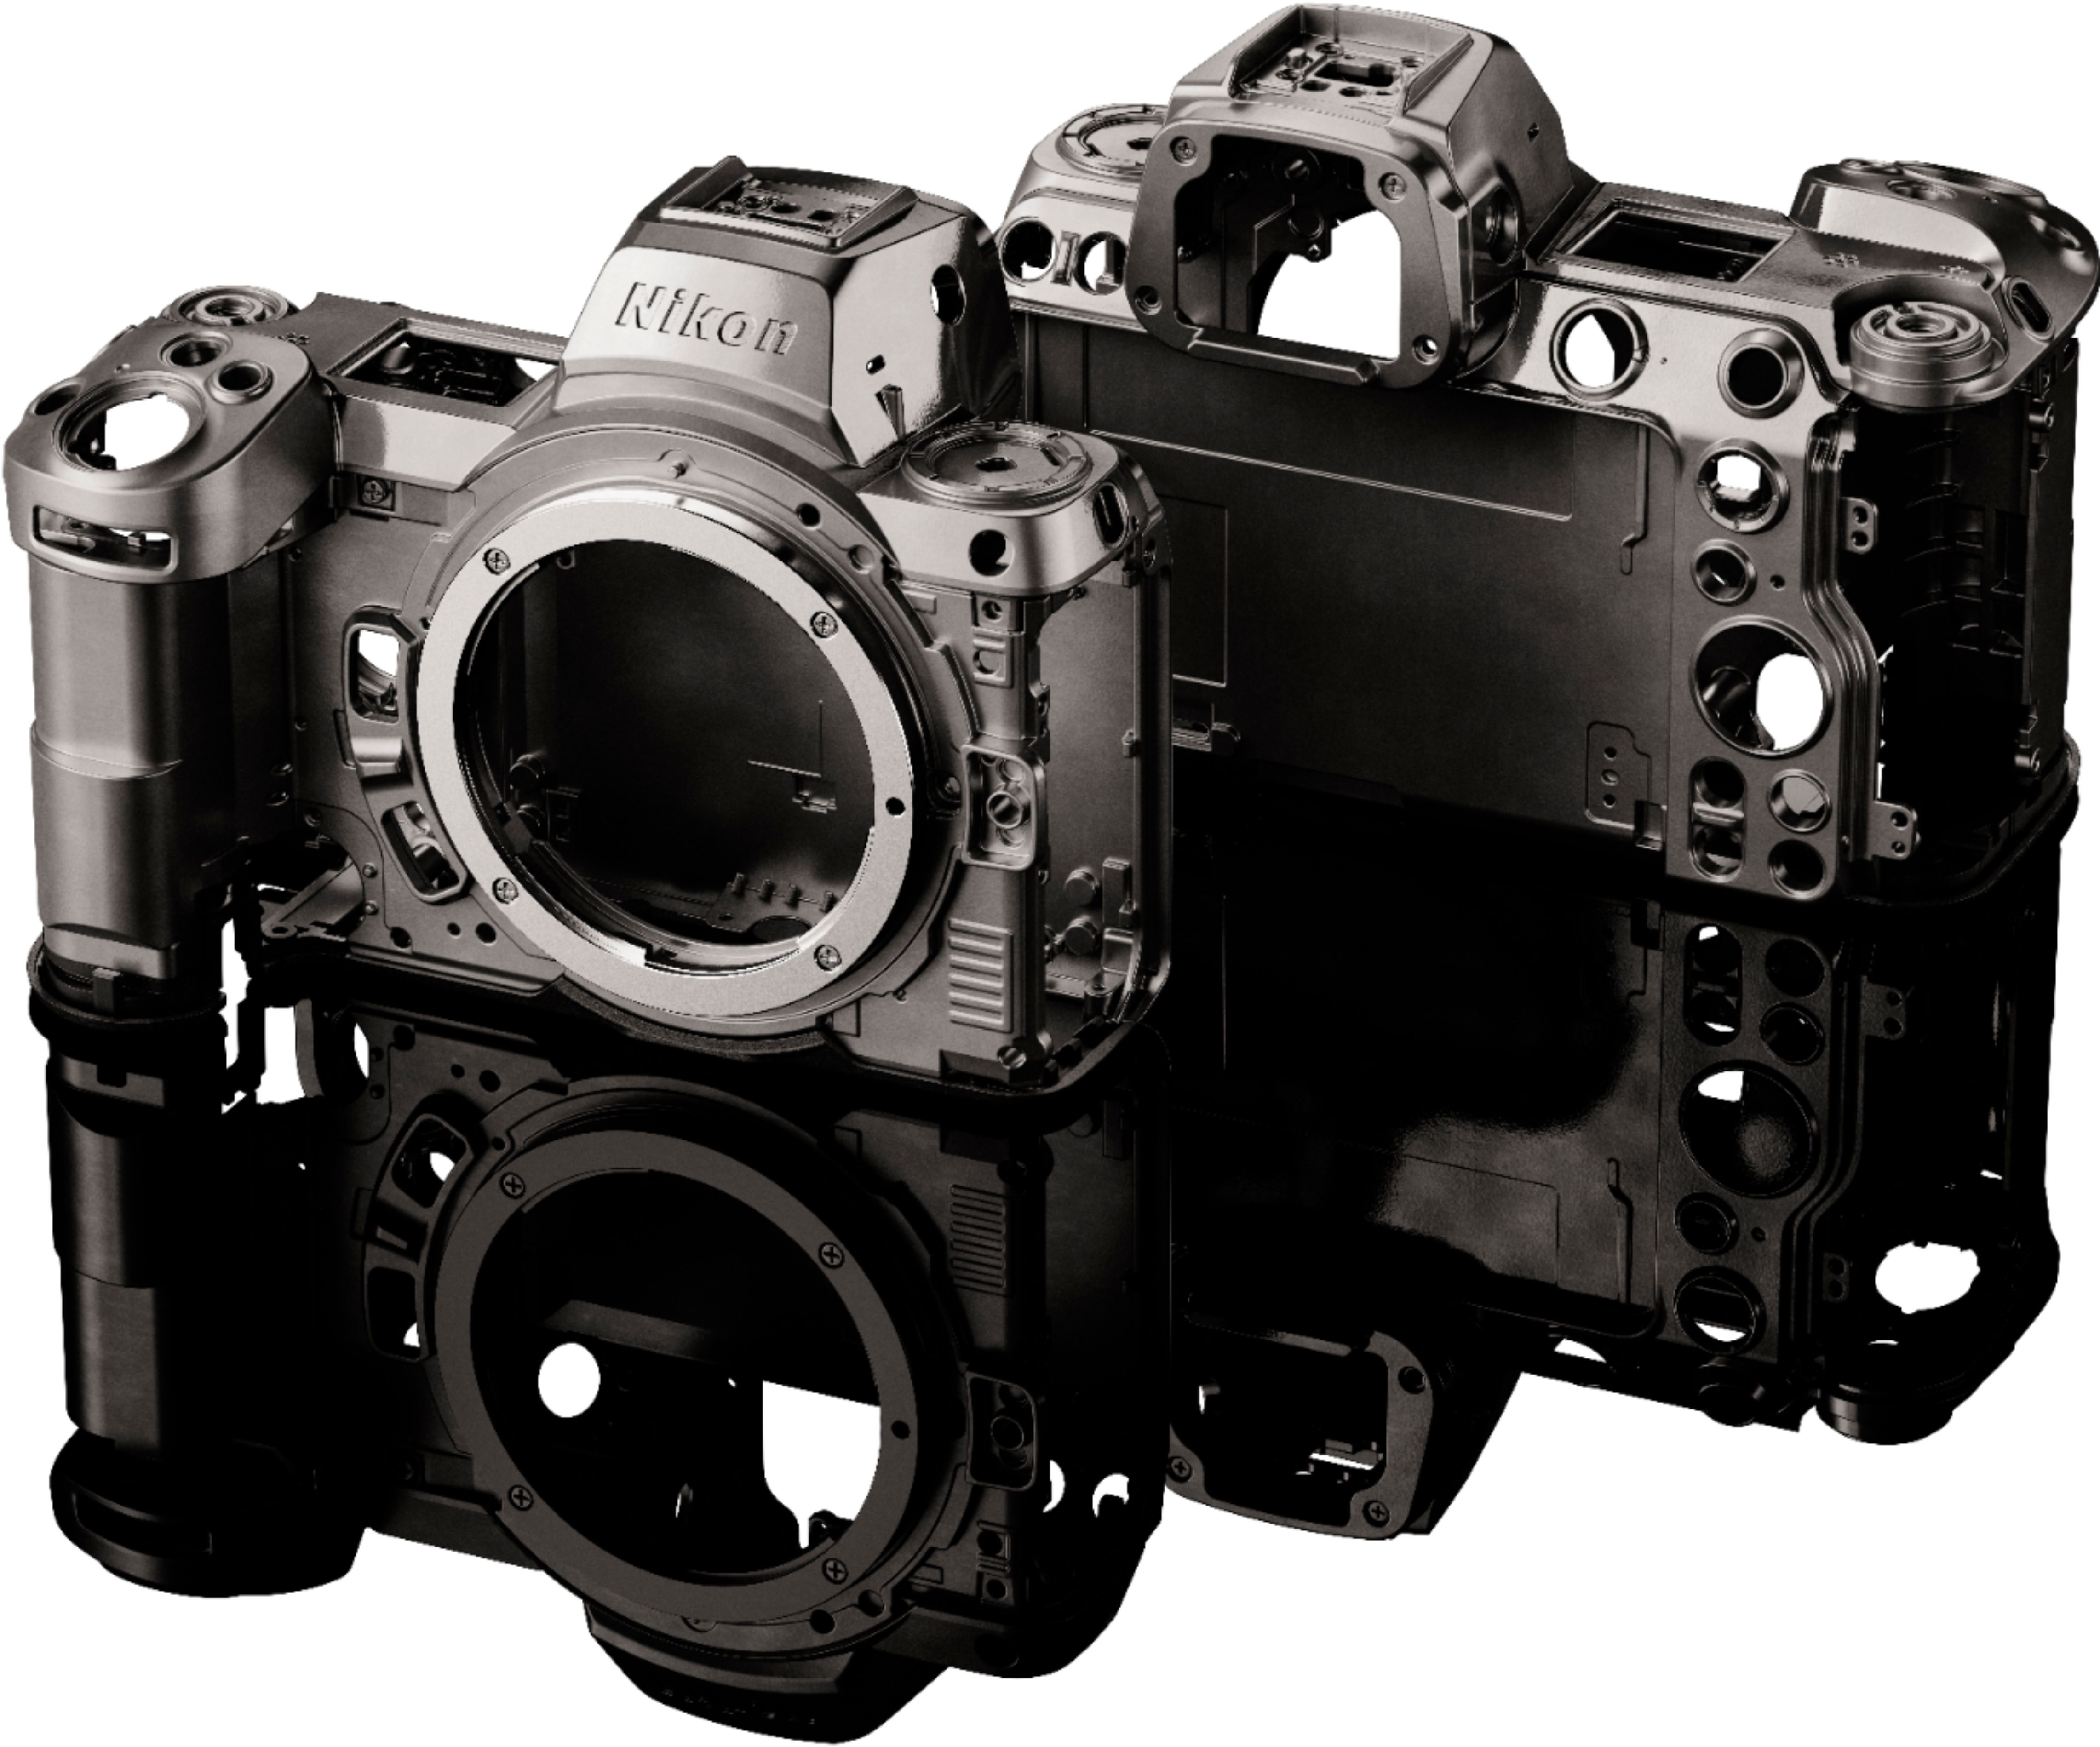 Black Z Mount Nikon Z6 II Mirrorless Camera With 24 X 120 mm at Rs 204000, Digital Camera in New Delhi